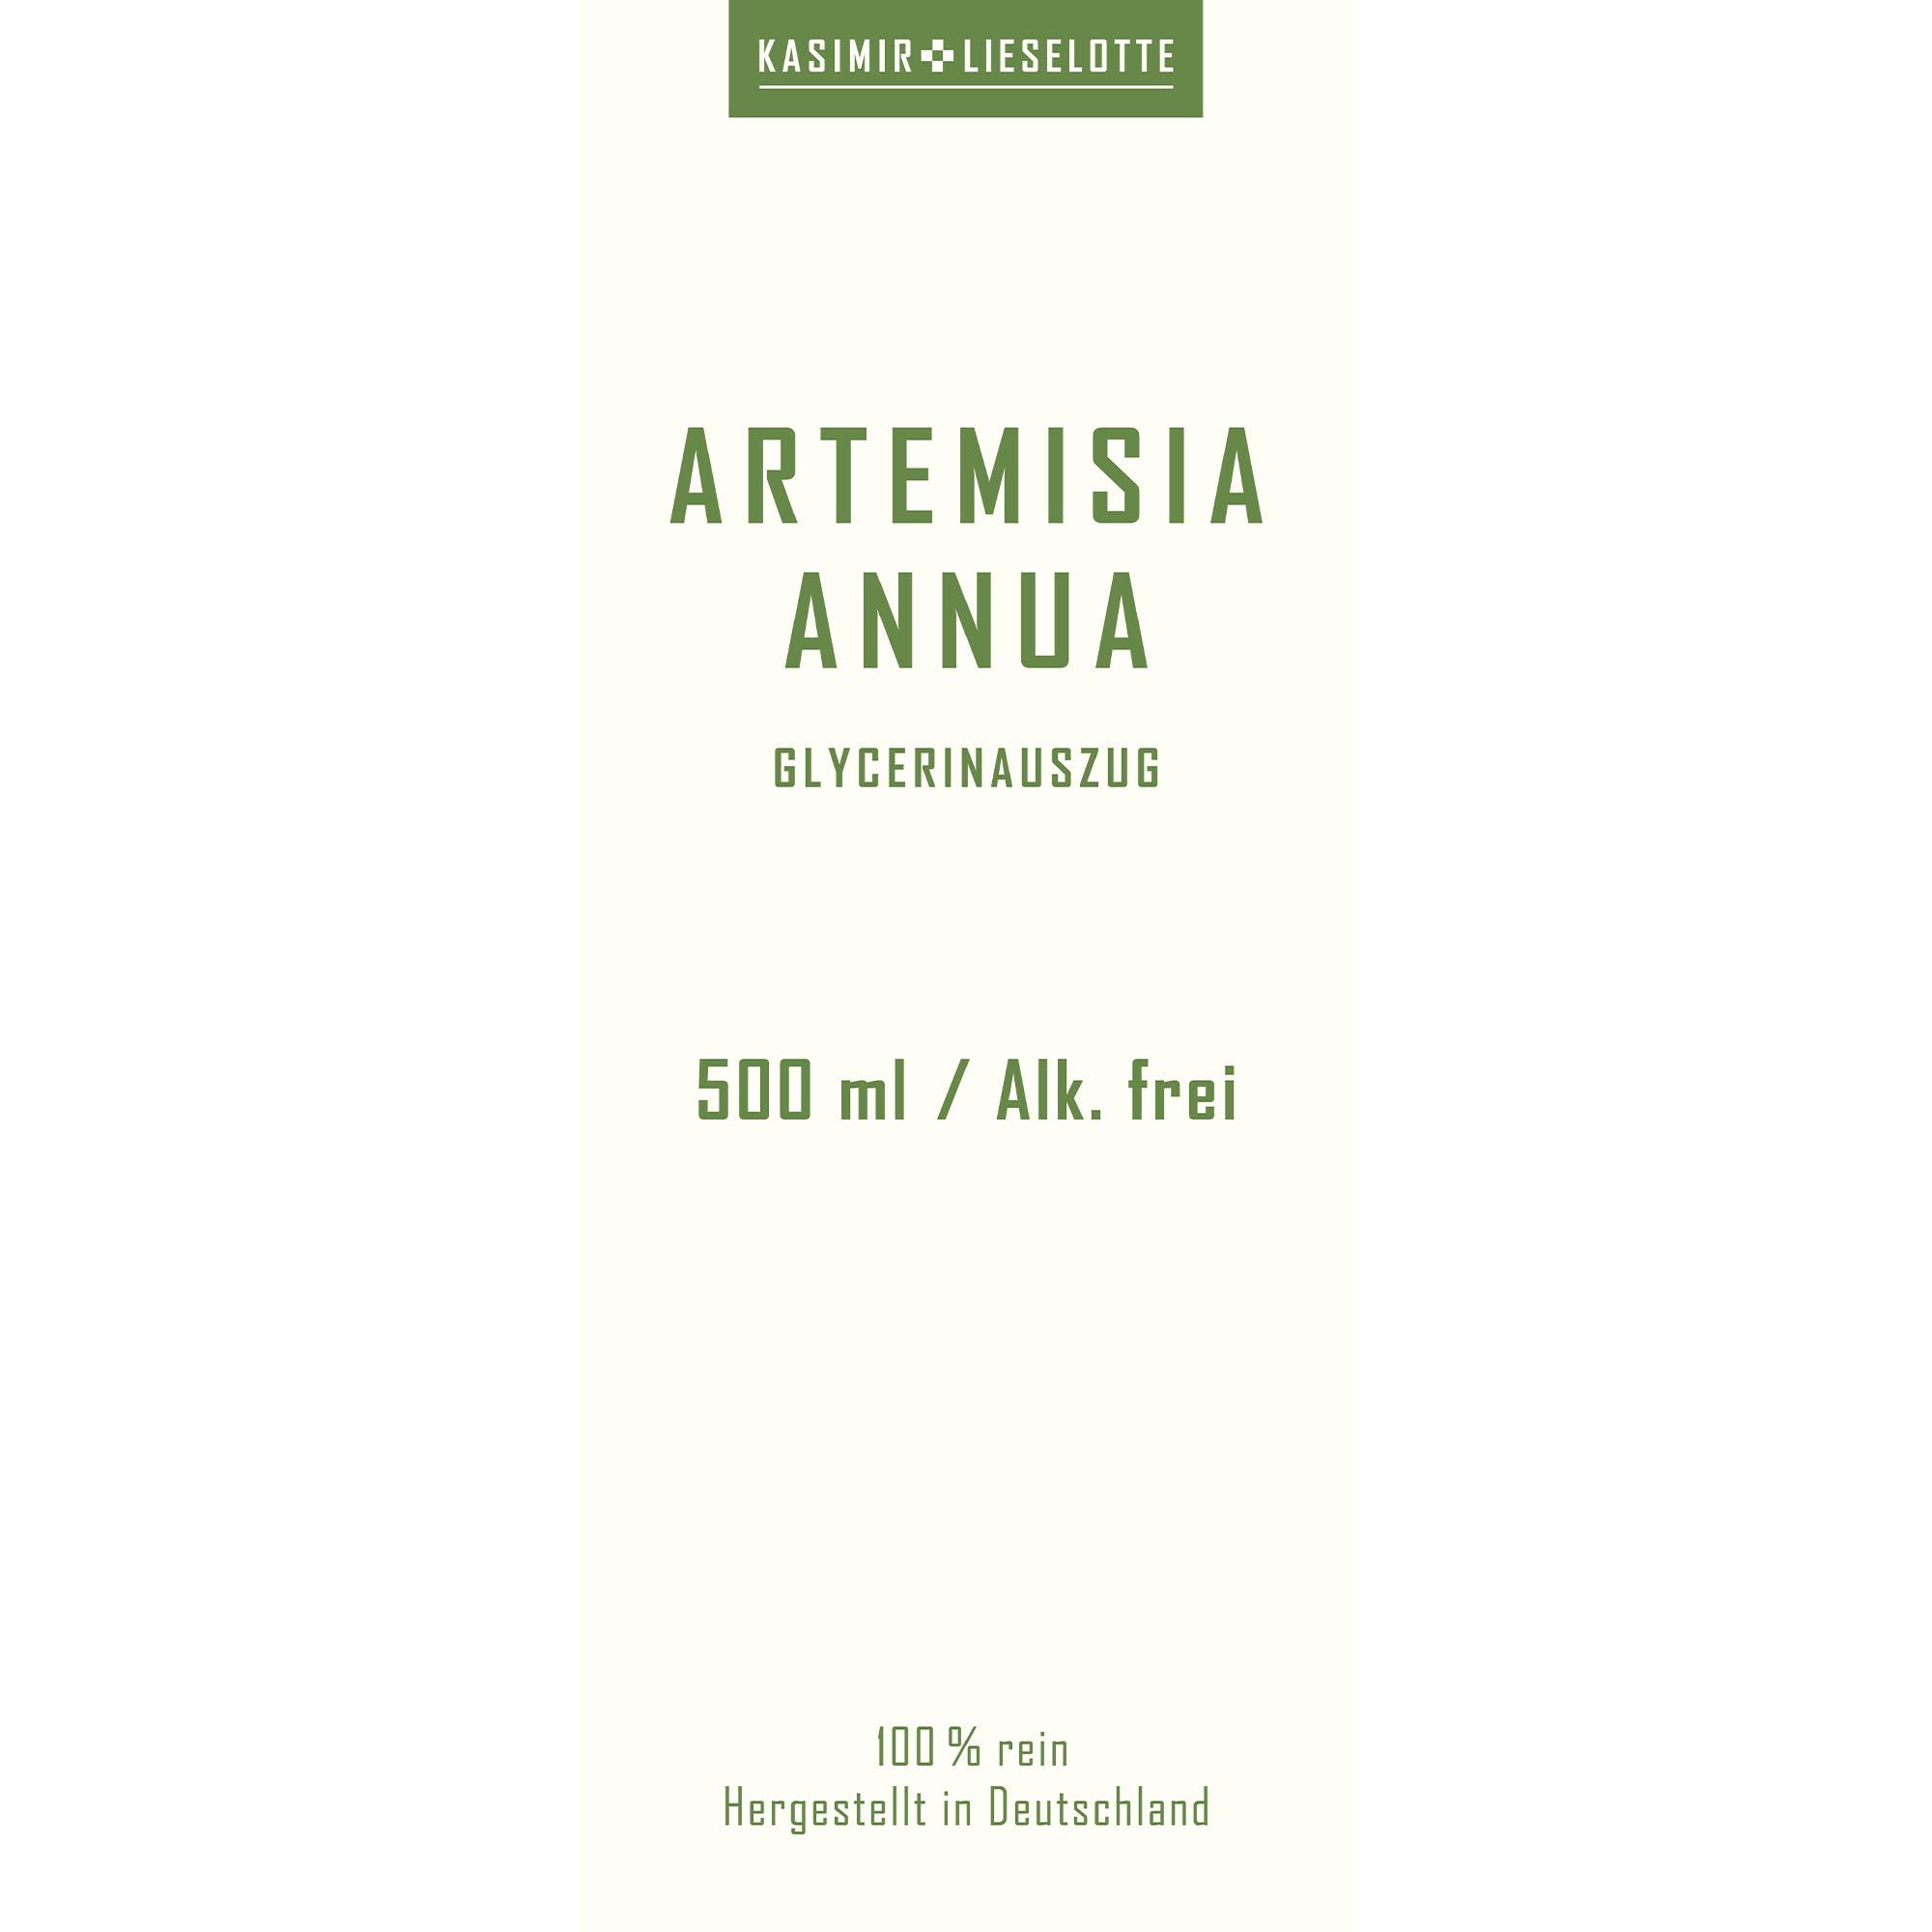 Artemisia annua Pflanzenauszug Alkoholfrei 500 ml